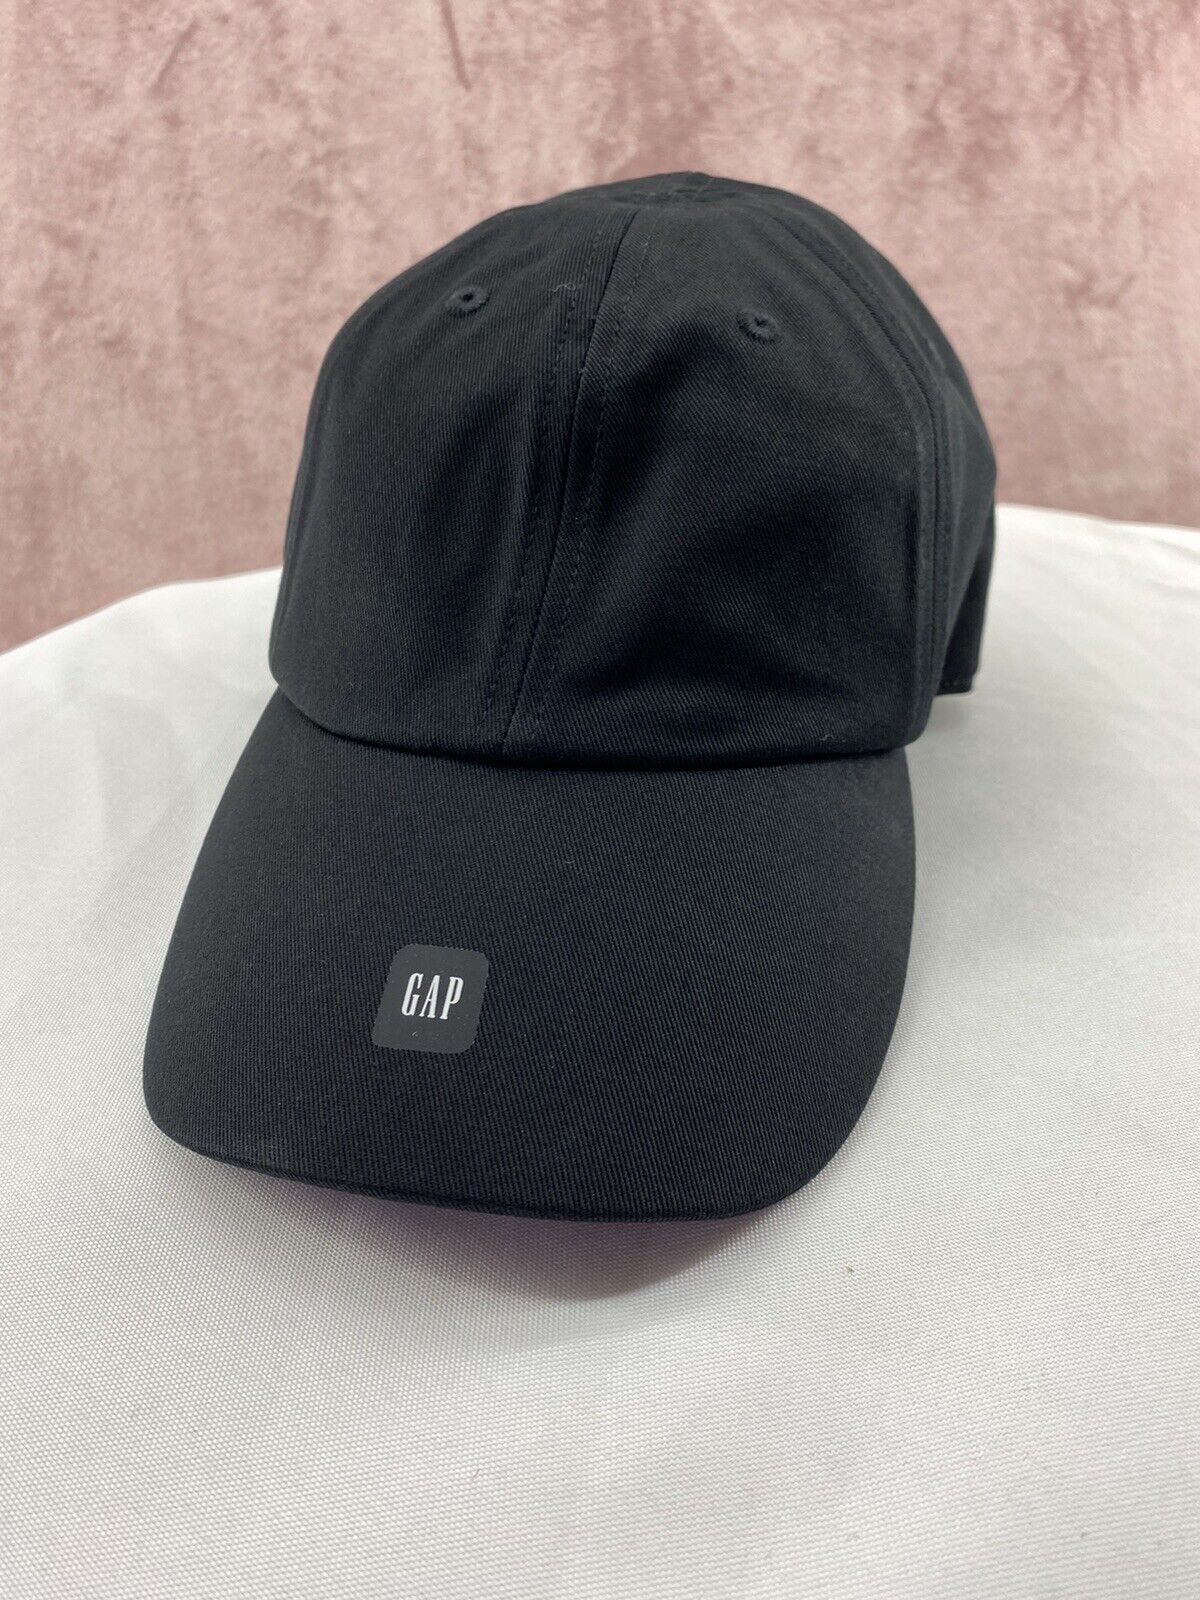 Gap Yeezy X Balenciaga Gap Logo Black Cap/Hat *Long Visor | Grailed